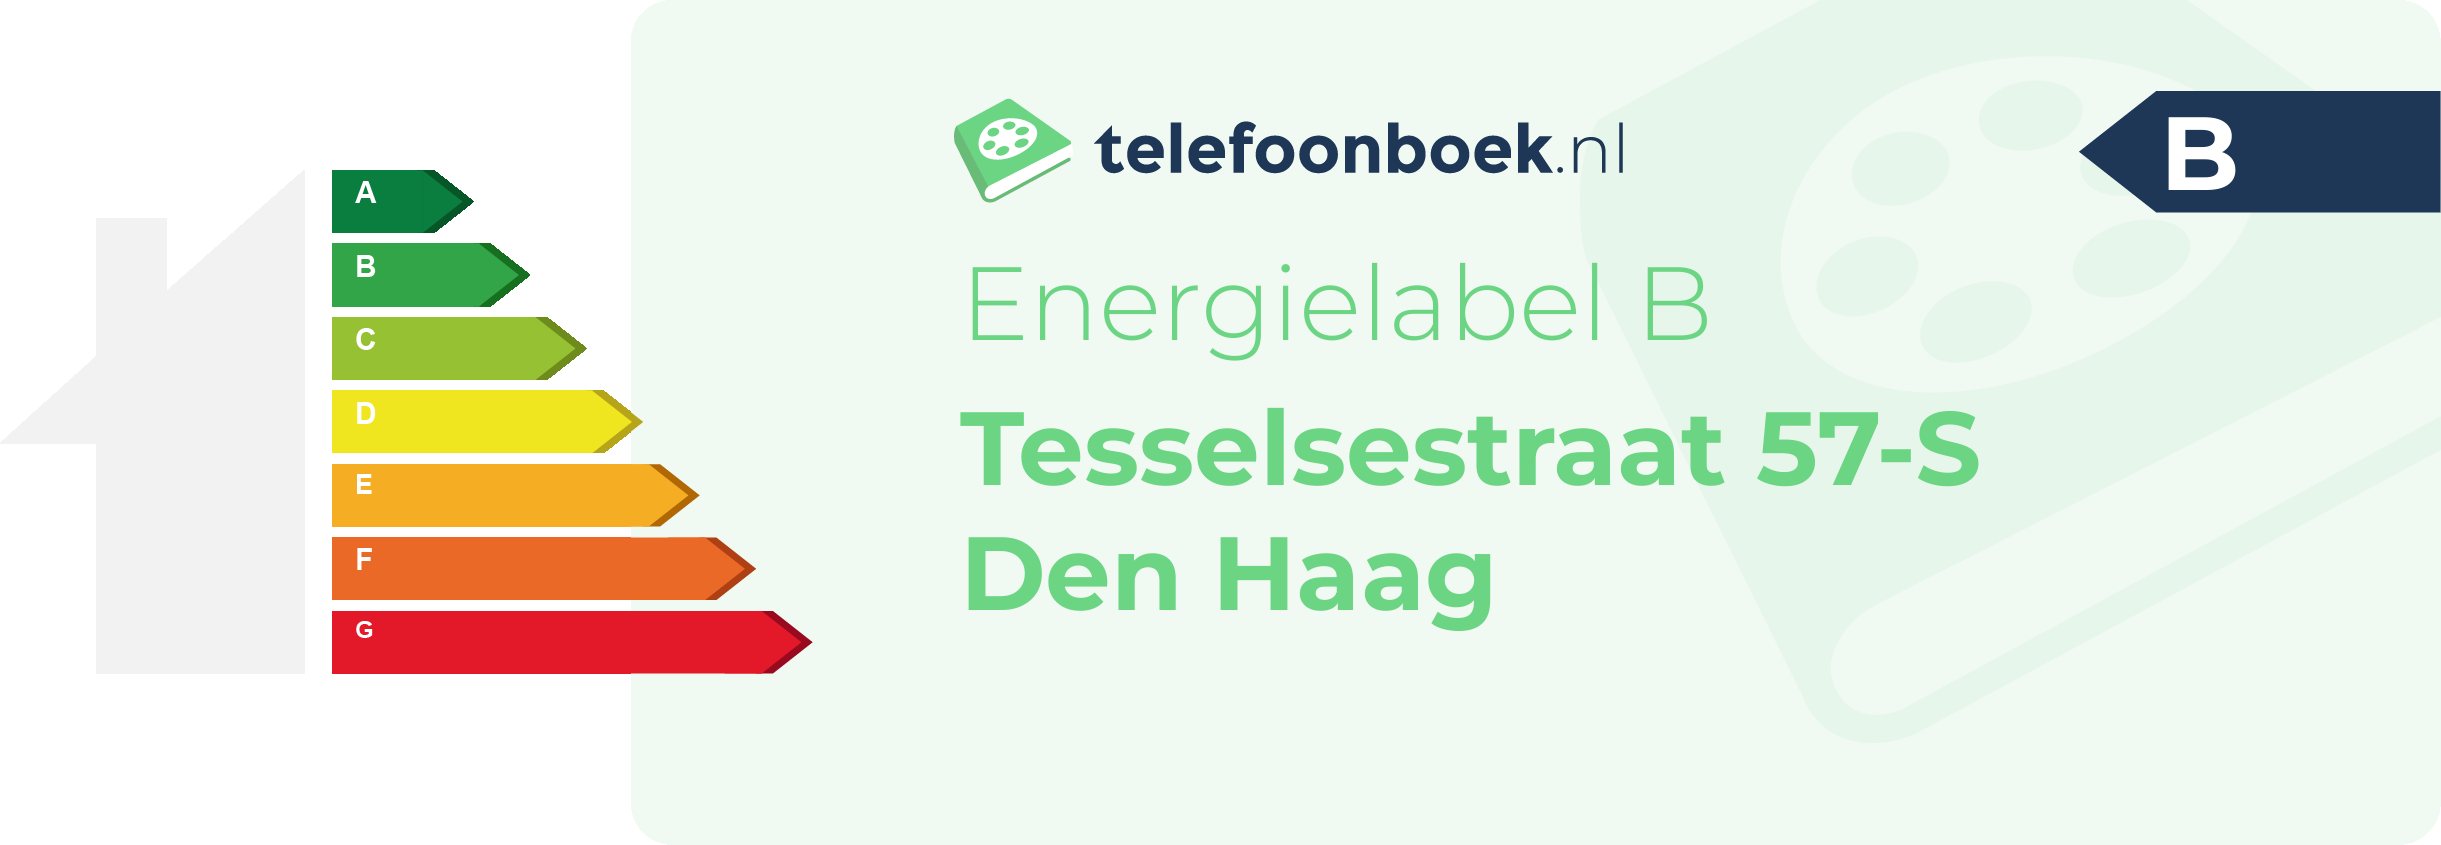 Energielabel Tesselsestraat 57-S Den Haag